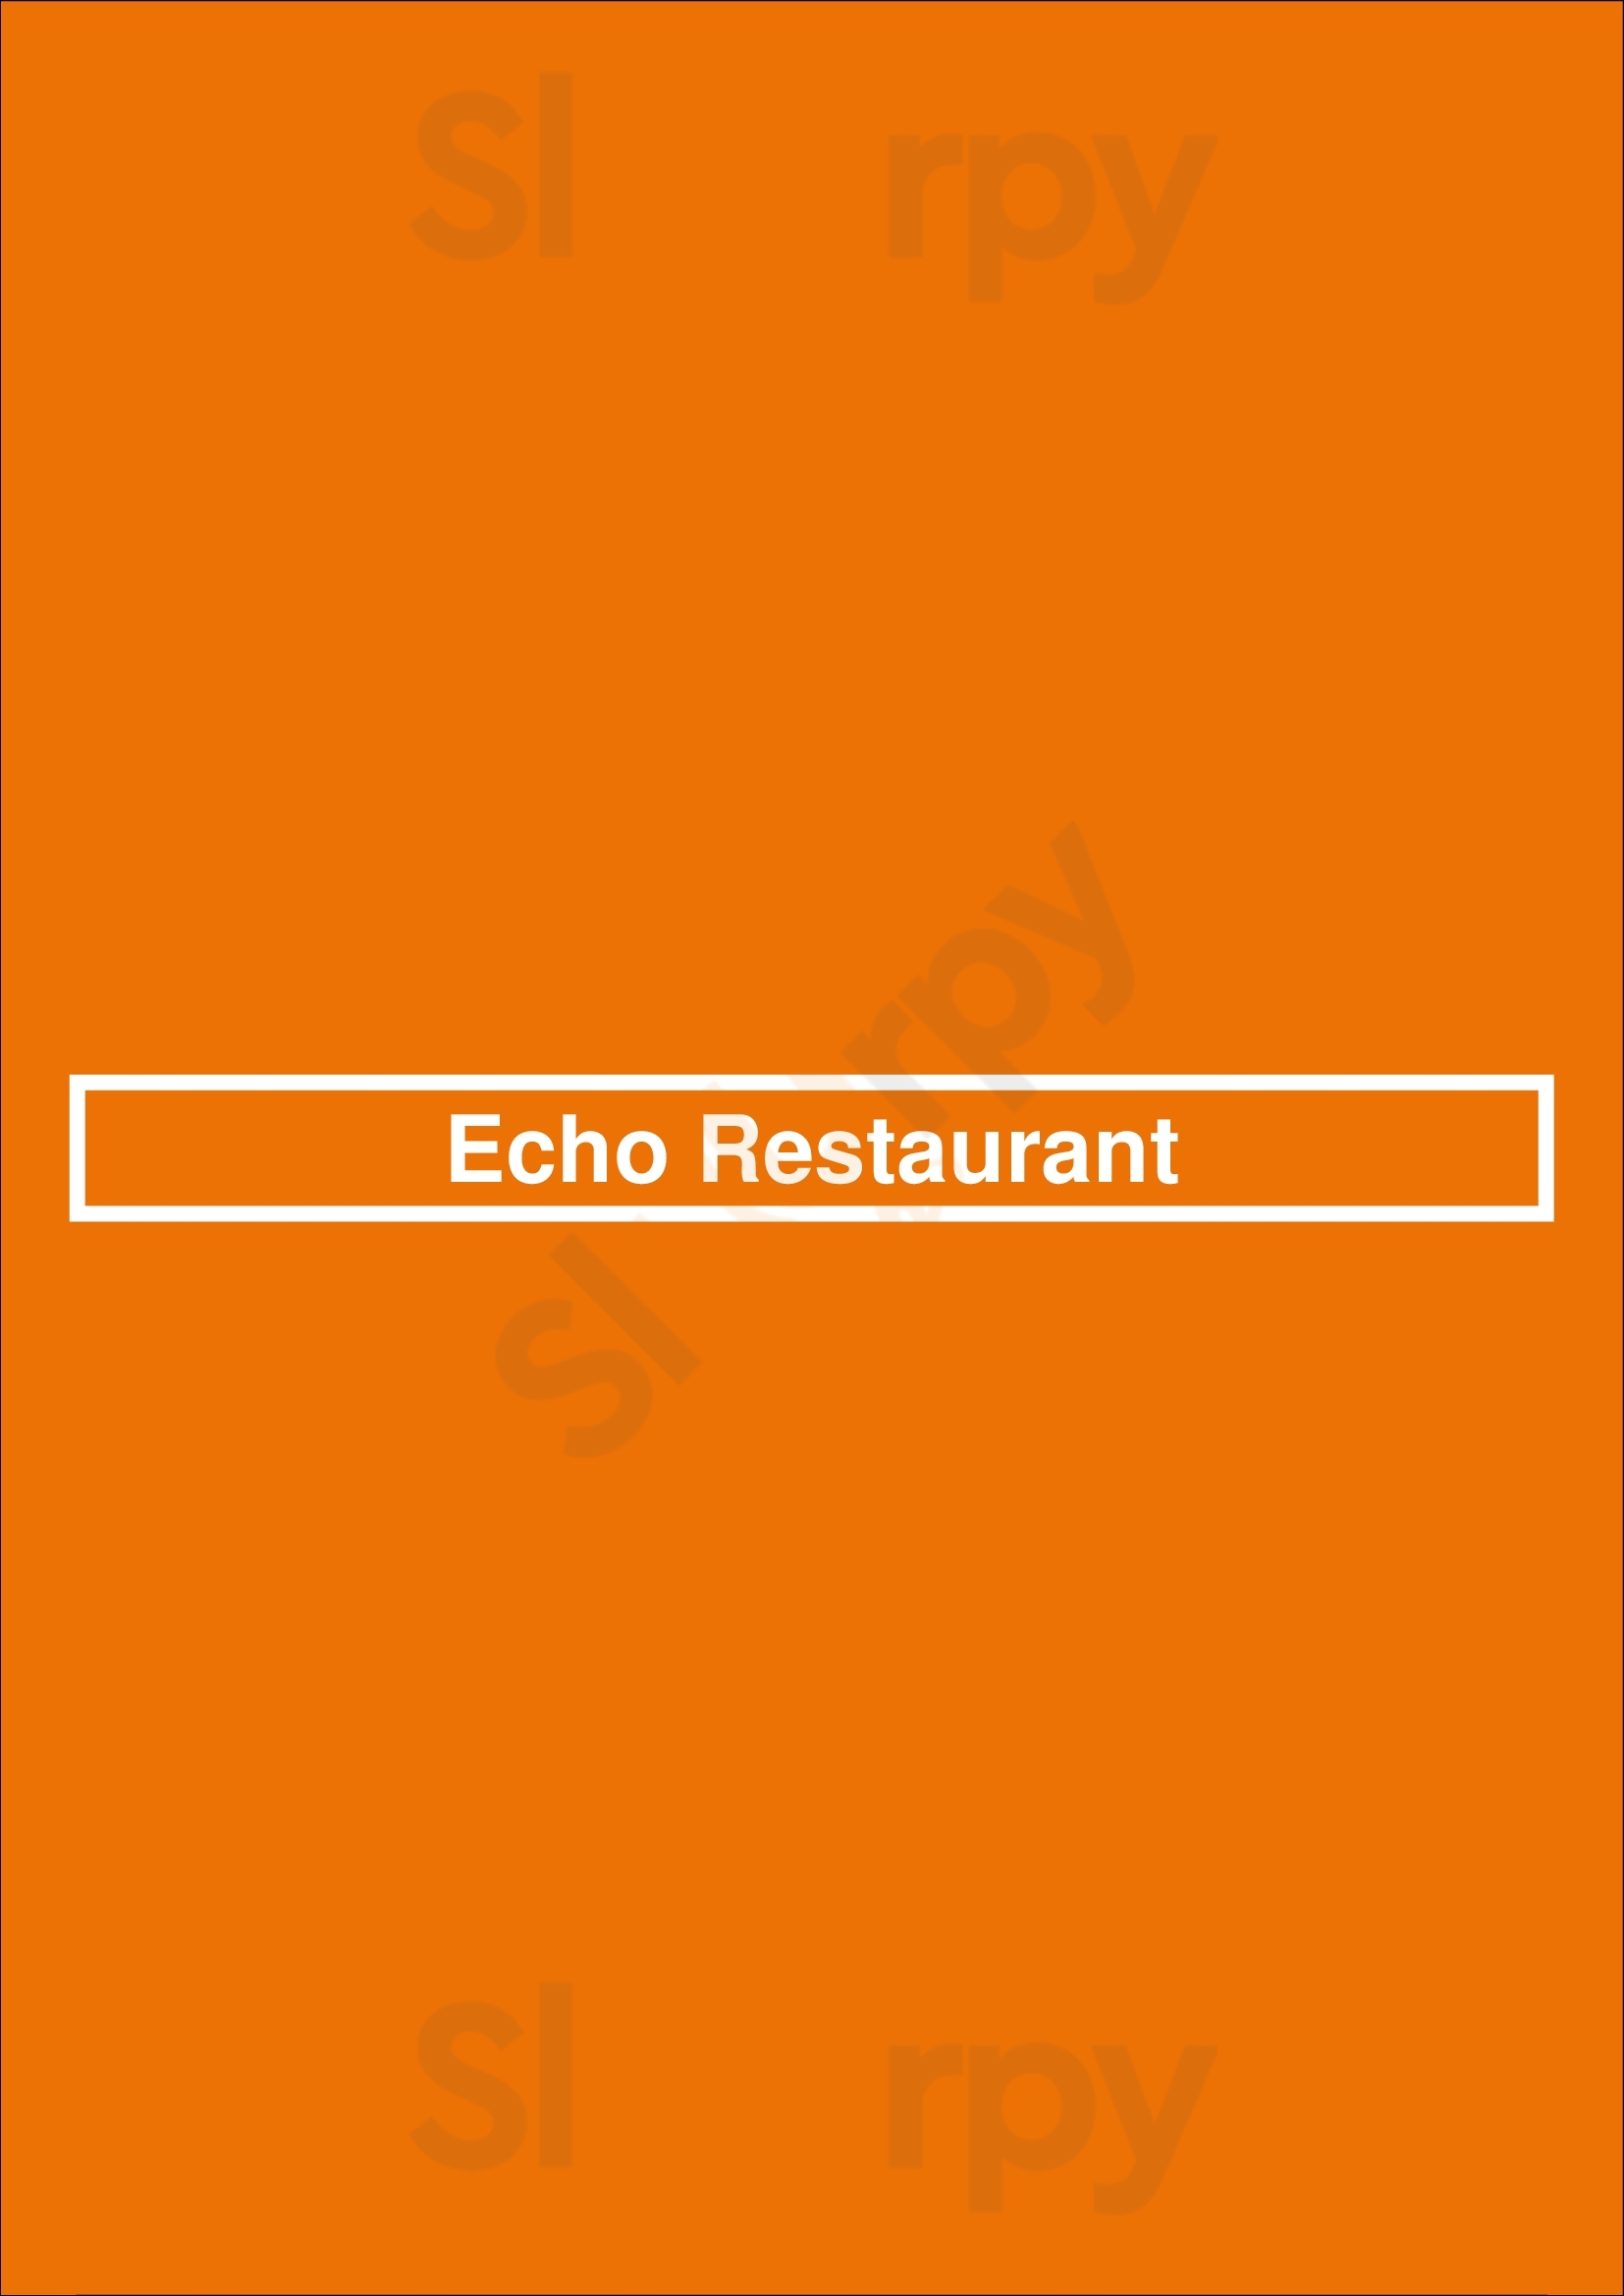 Echo Healthy Restaurant Barcelona Menu - 1